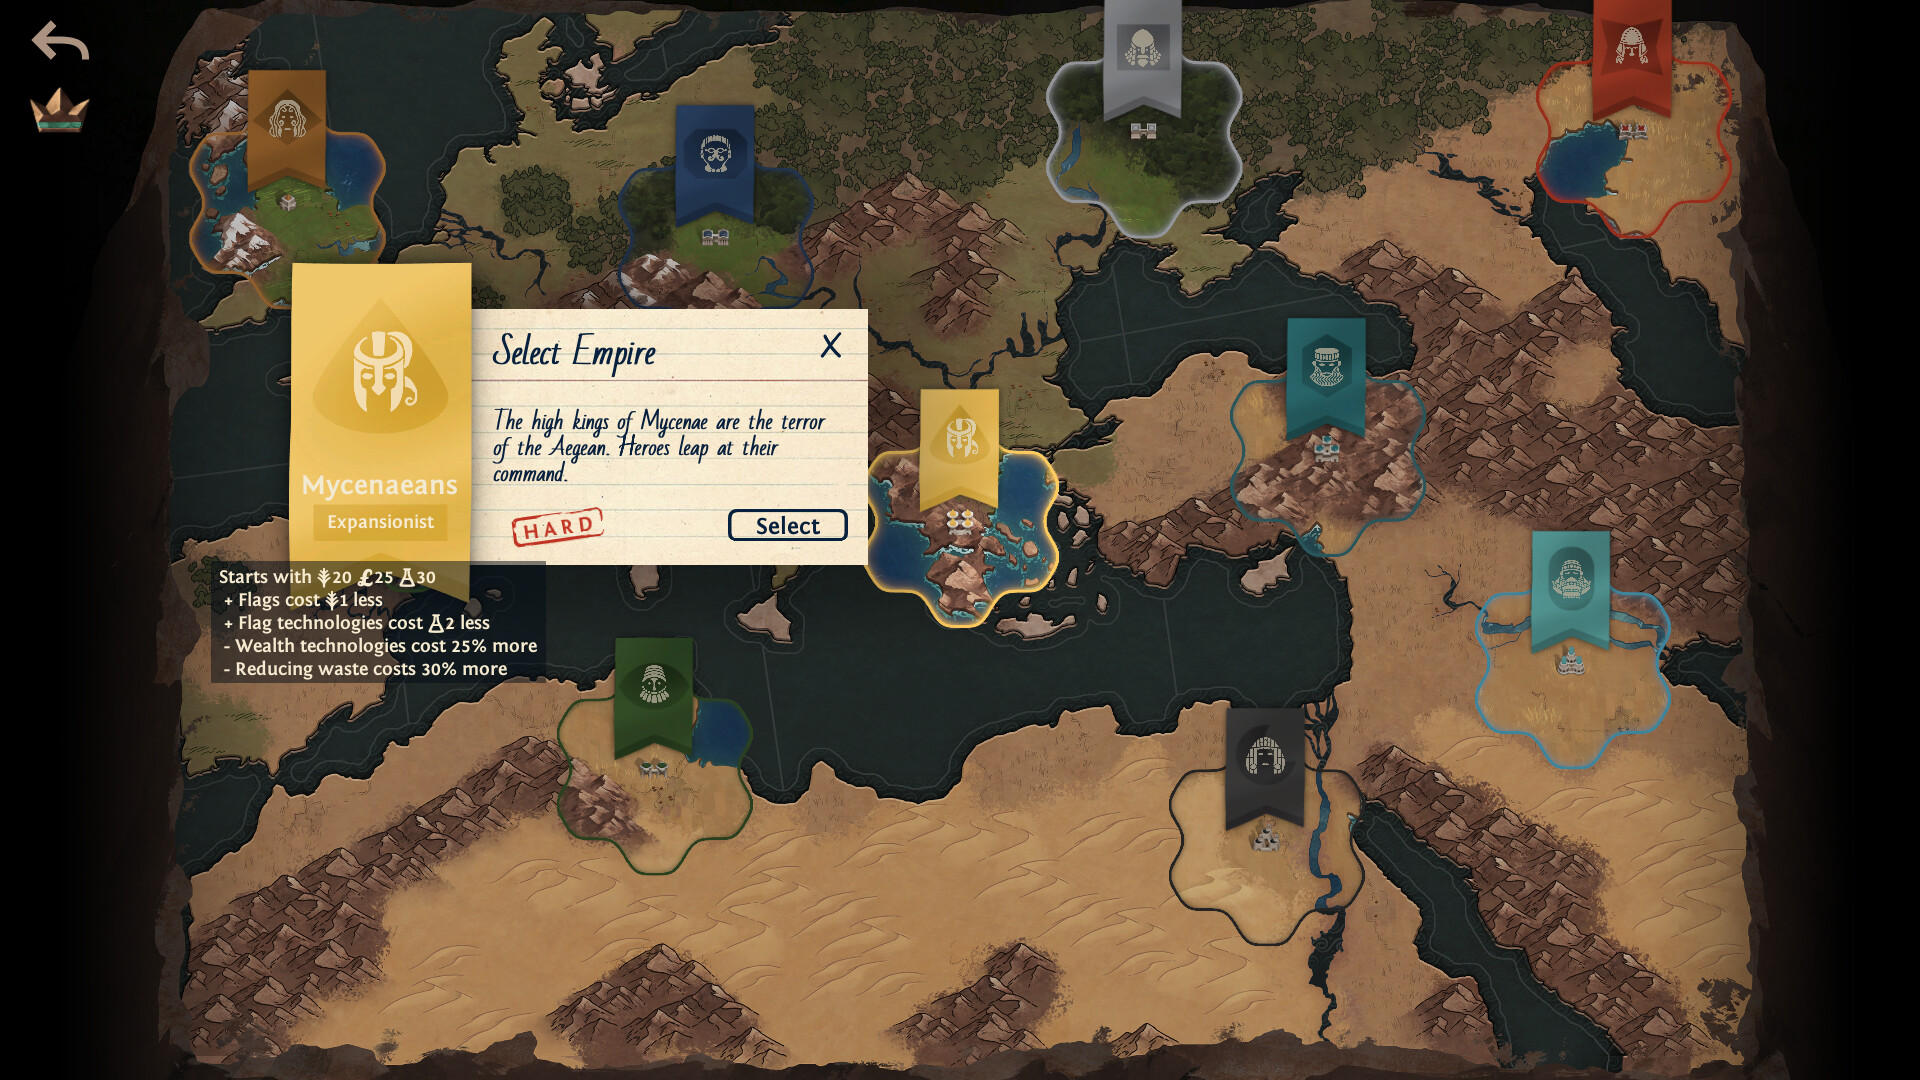 Ozymandias: Bronze Age Empire Sim NA Steam CD Key